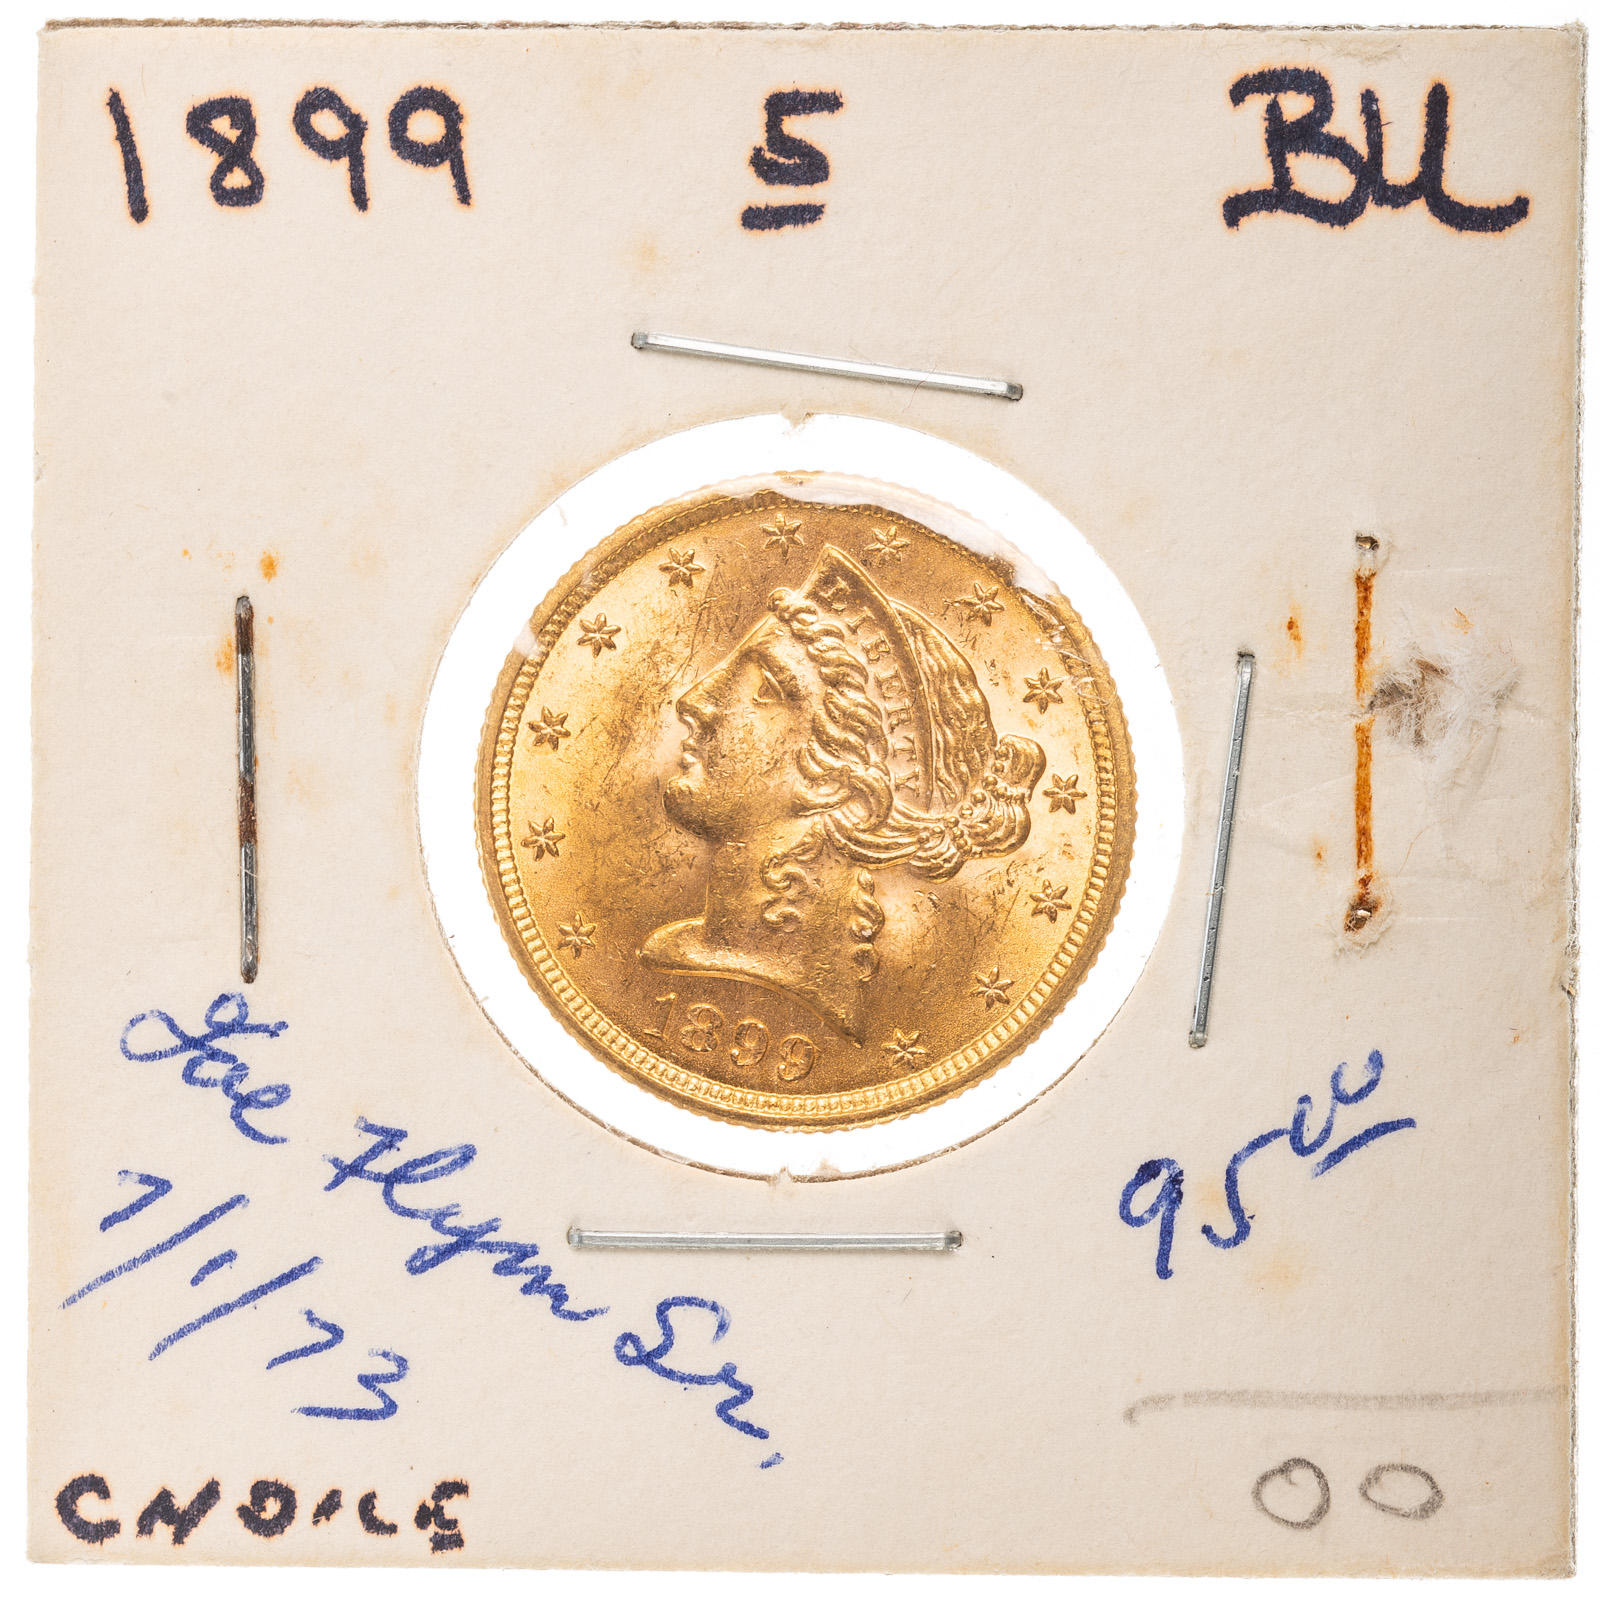 1899 5 LIBERTY GOLD HALF EAGLE 3b2827